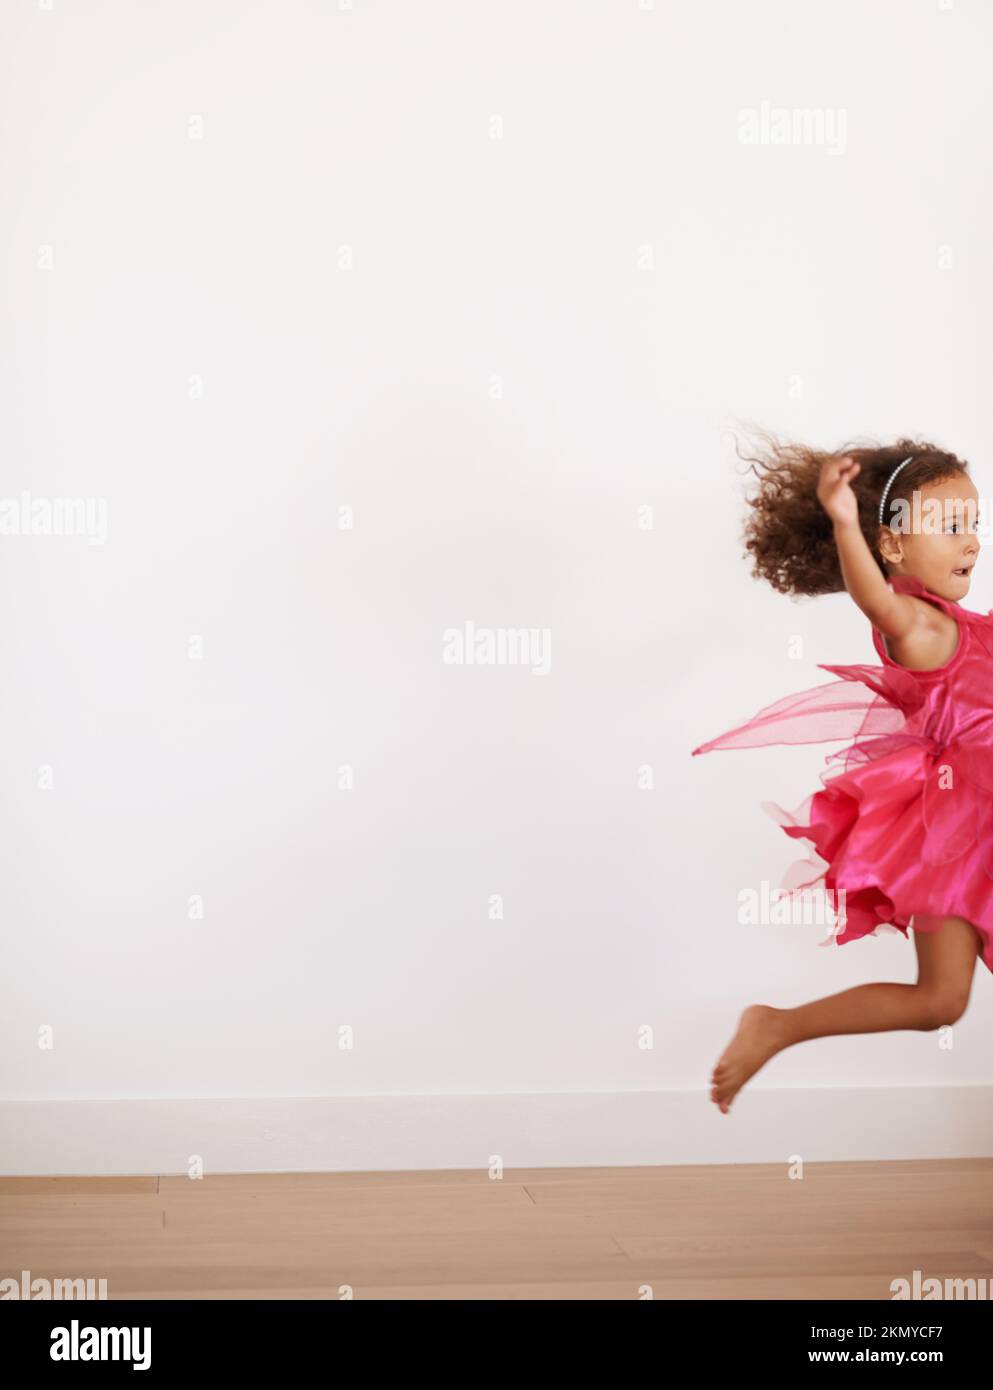 Sugar rush. an exuberant little girl running indoors. Stock Photo